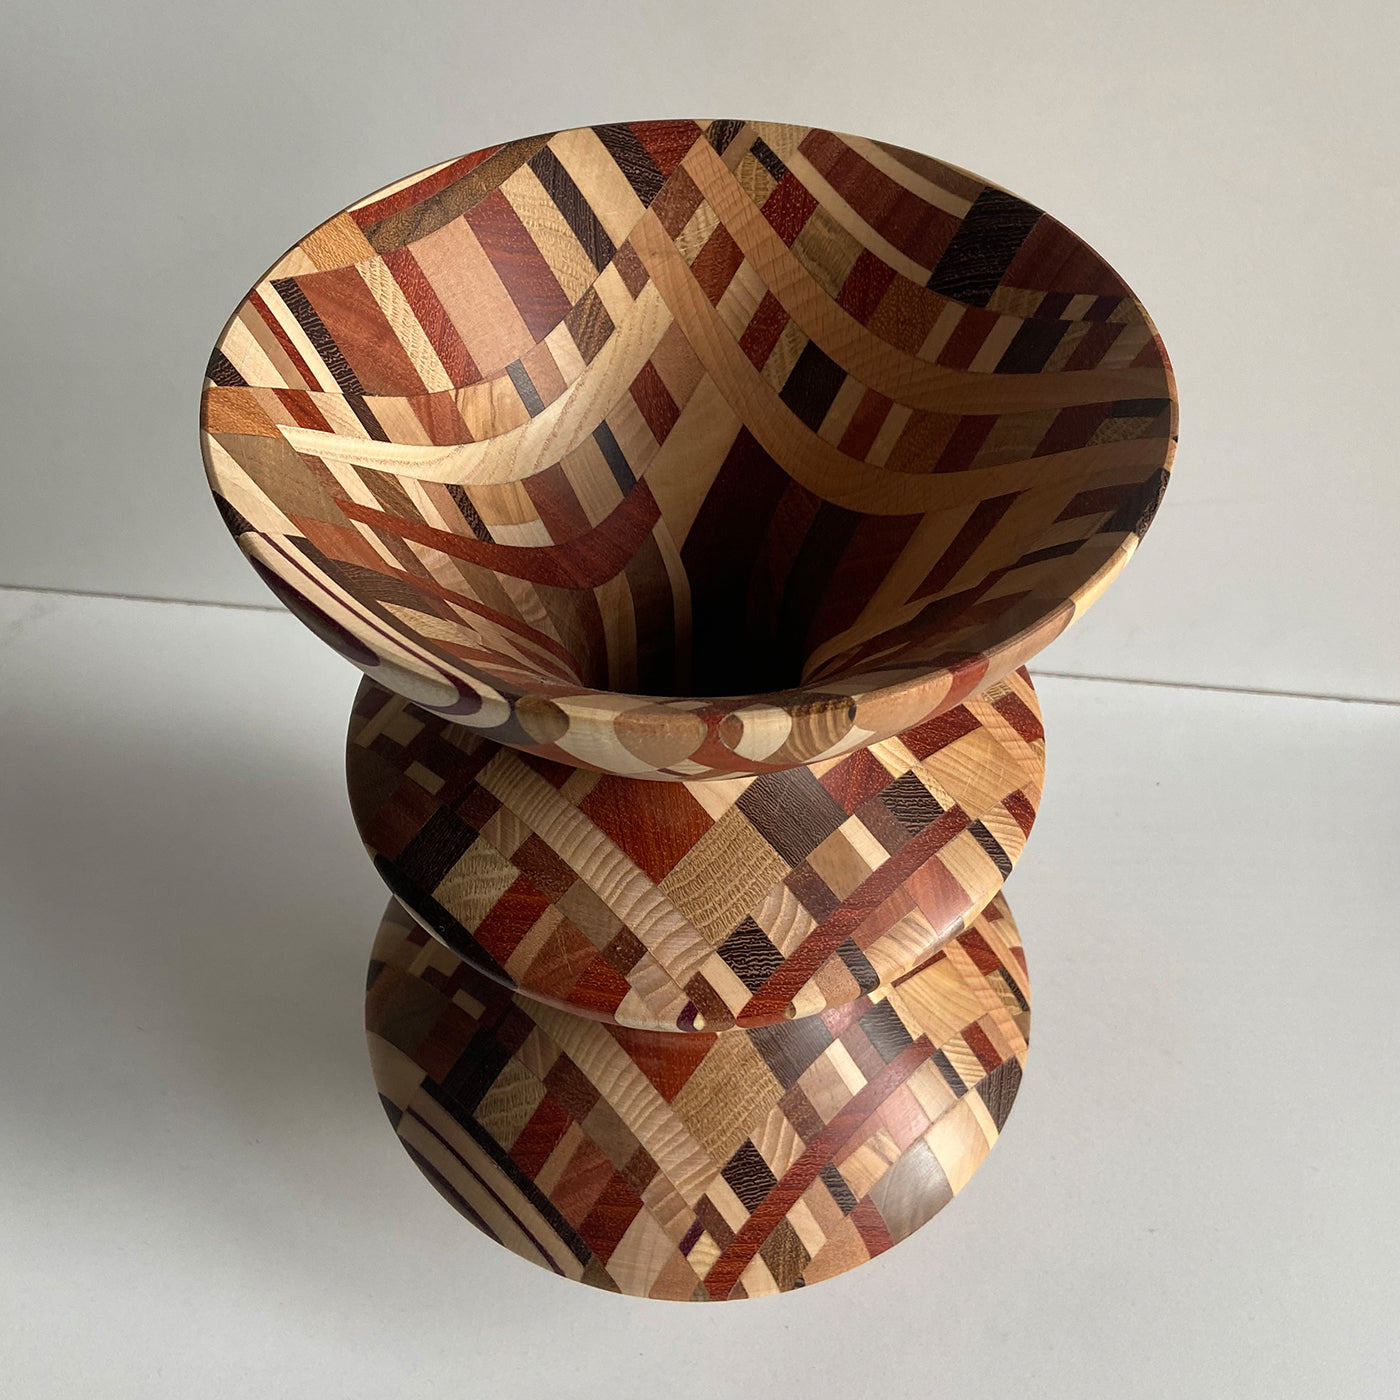 David Polyhedral Vase - Alternative view 1